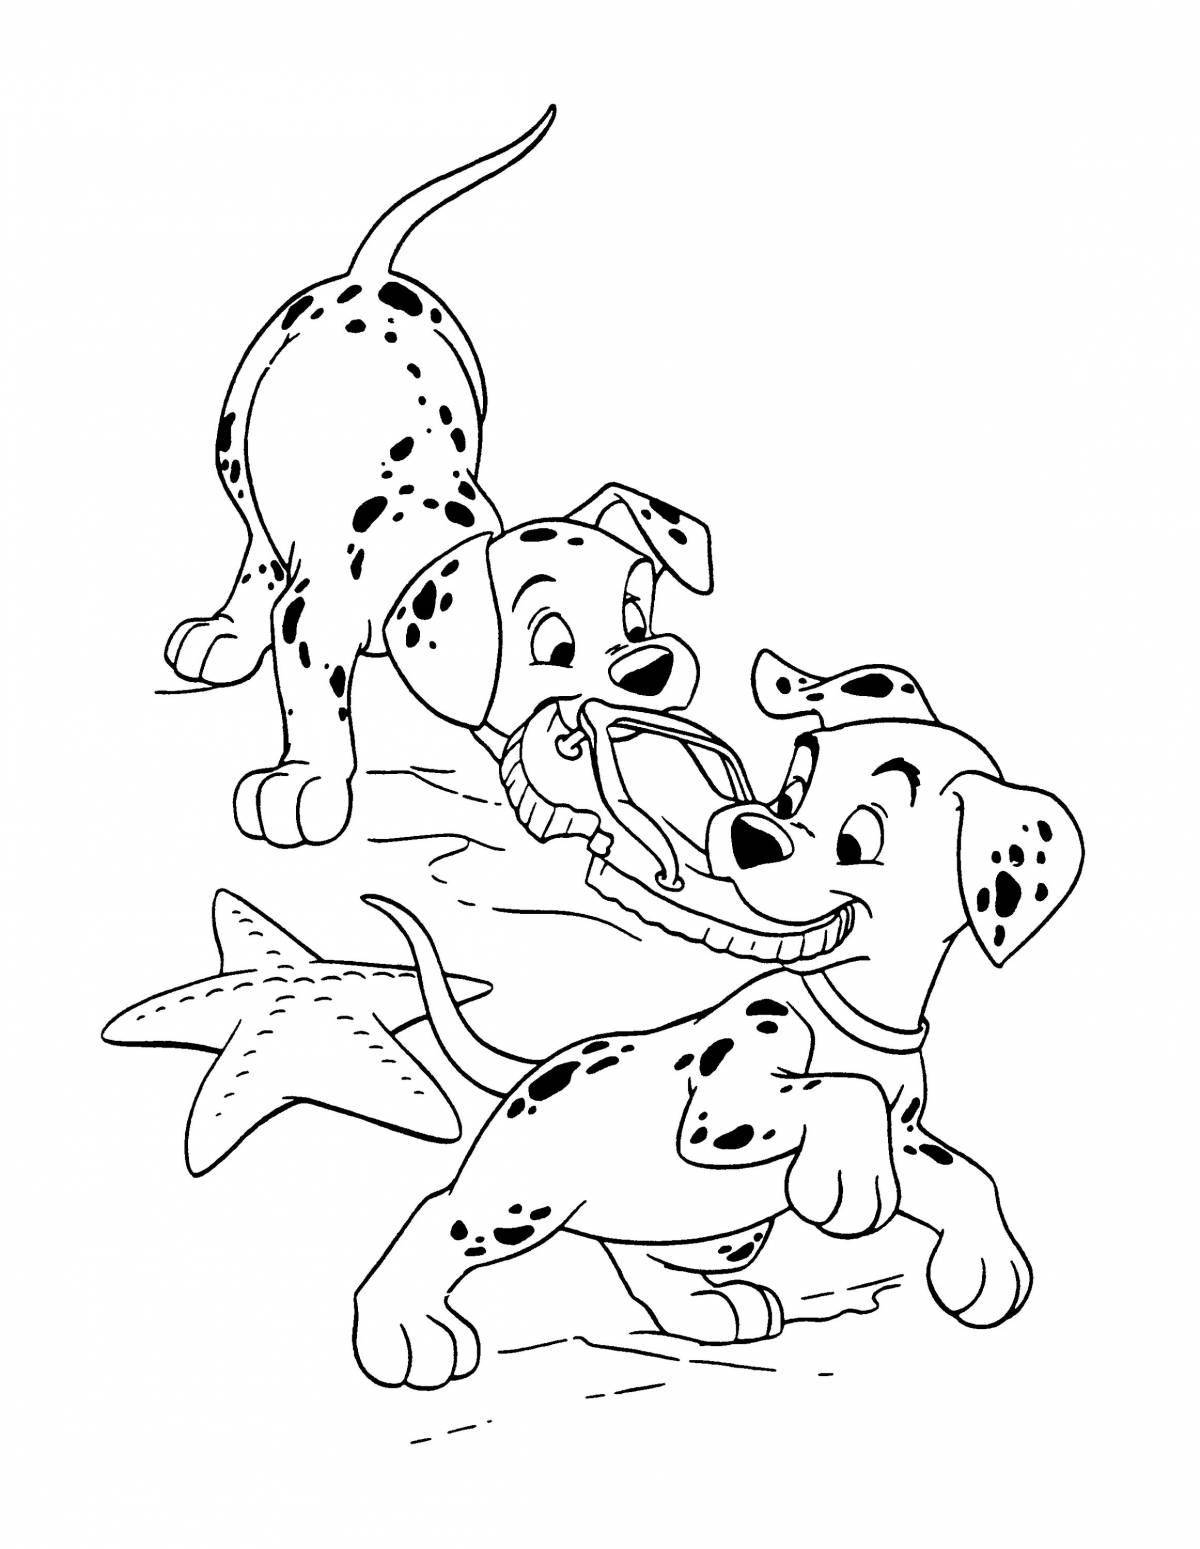 Fairy dalmatian coloring book for kids